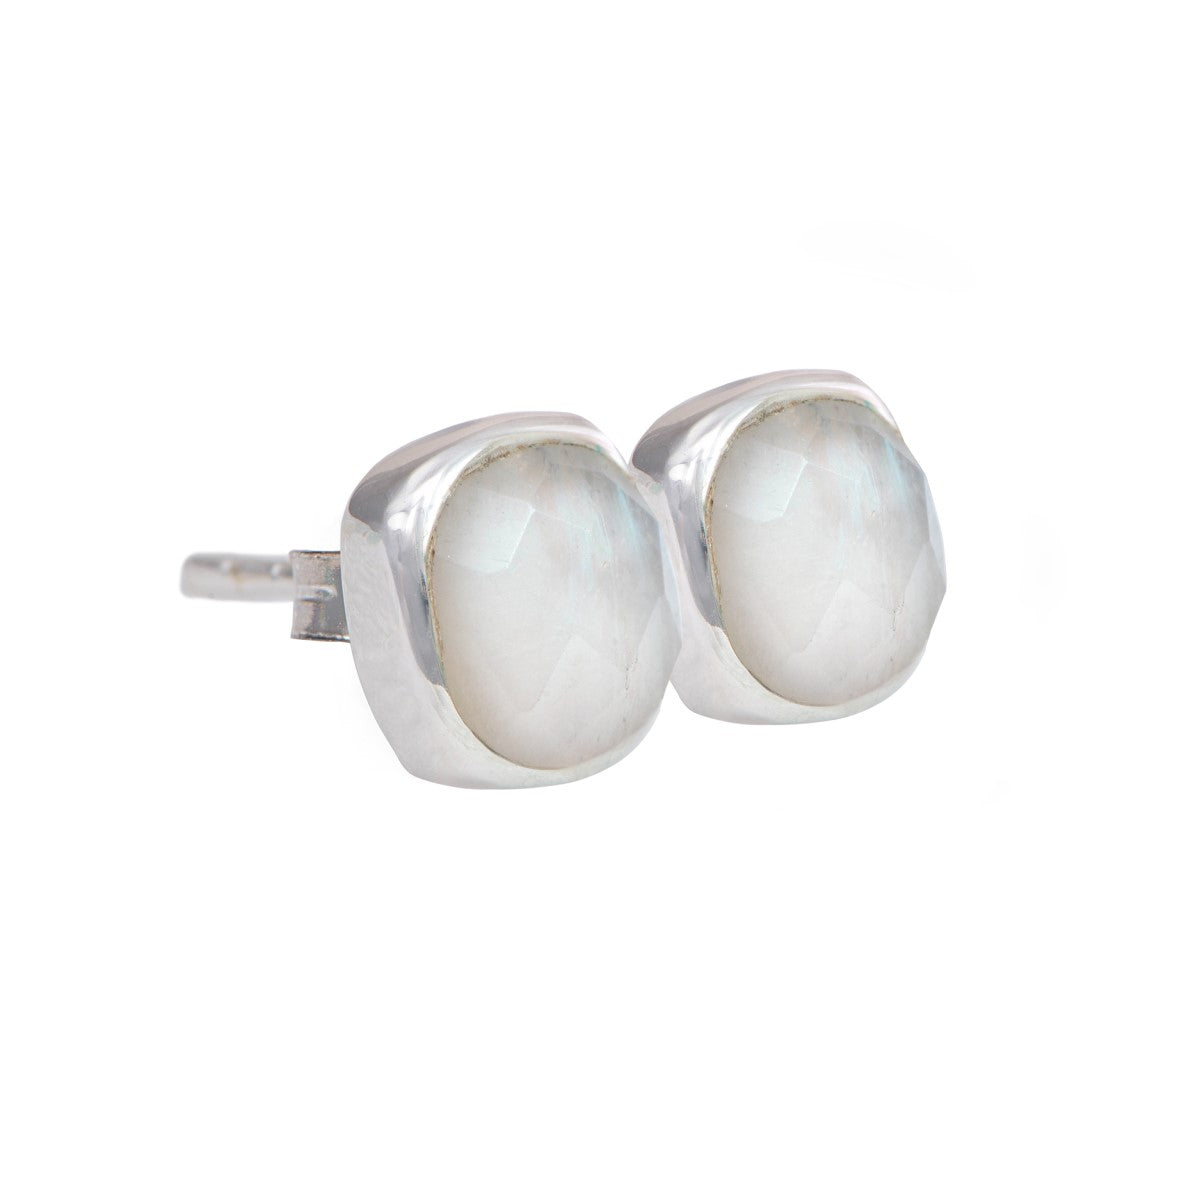 Faceted Square Moonstone Gemstone Stud Earrings in Sterling Silver